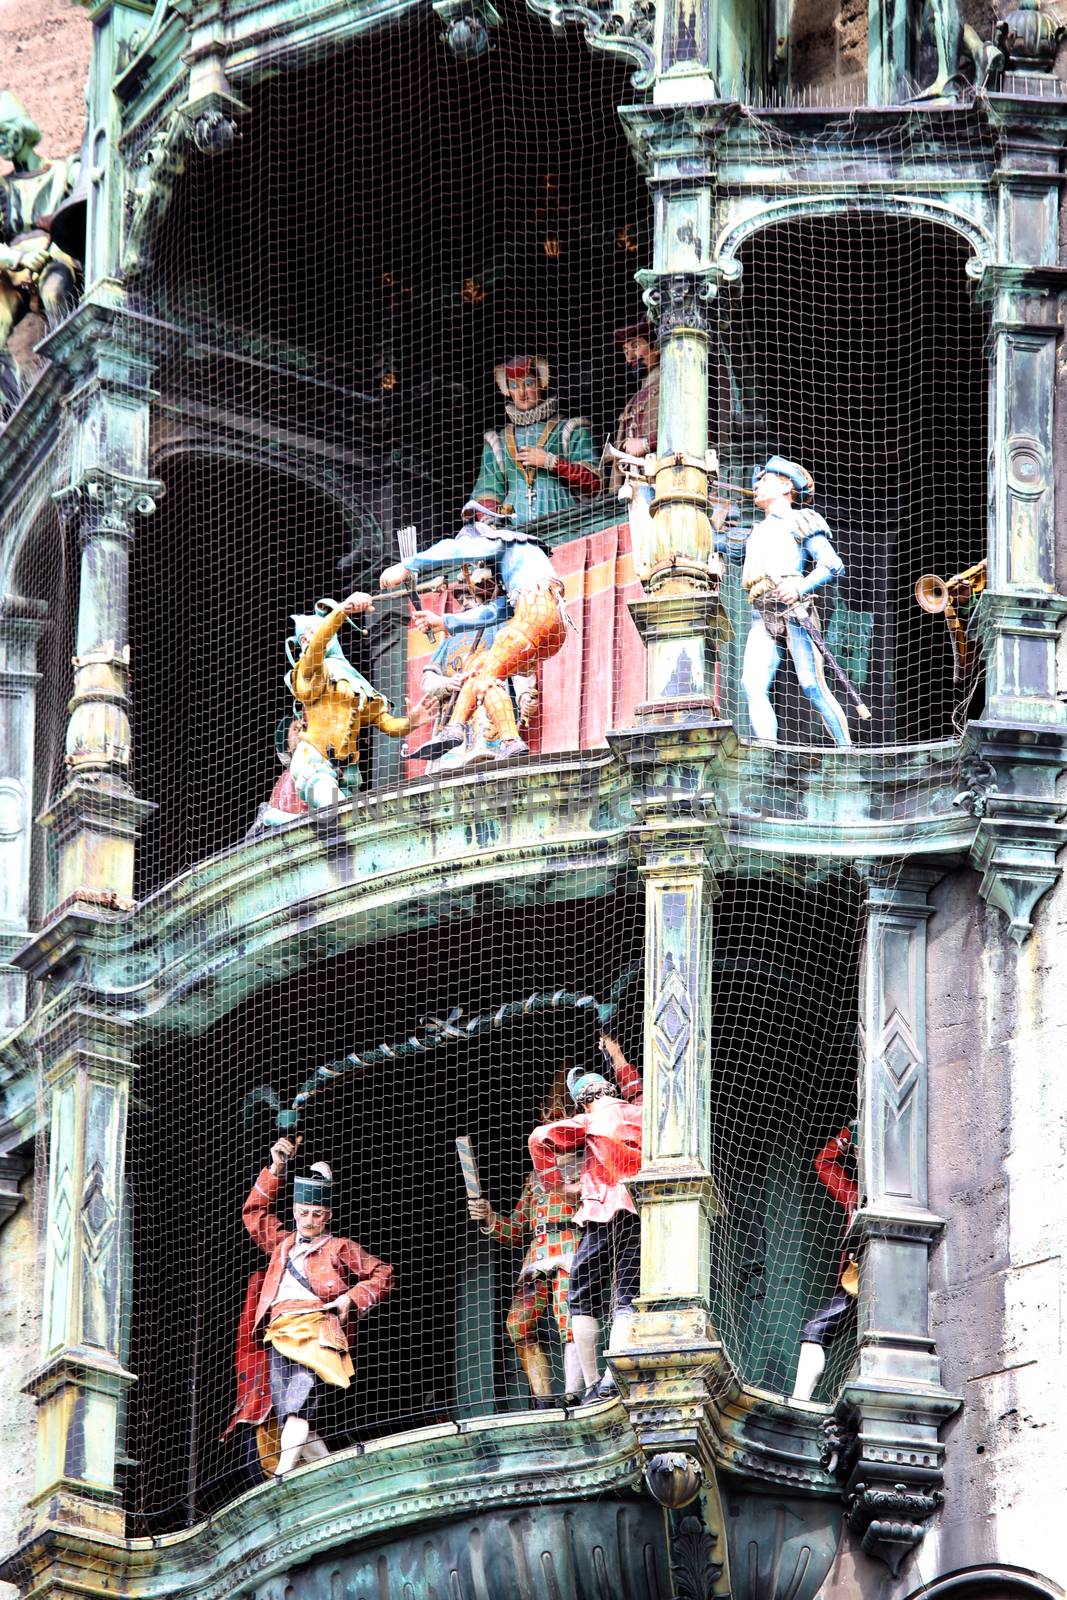 Glockenspiel on the city hall of Munich, Germany